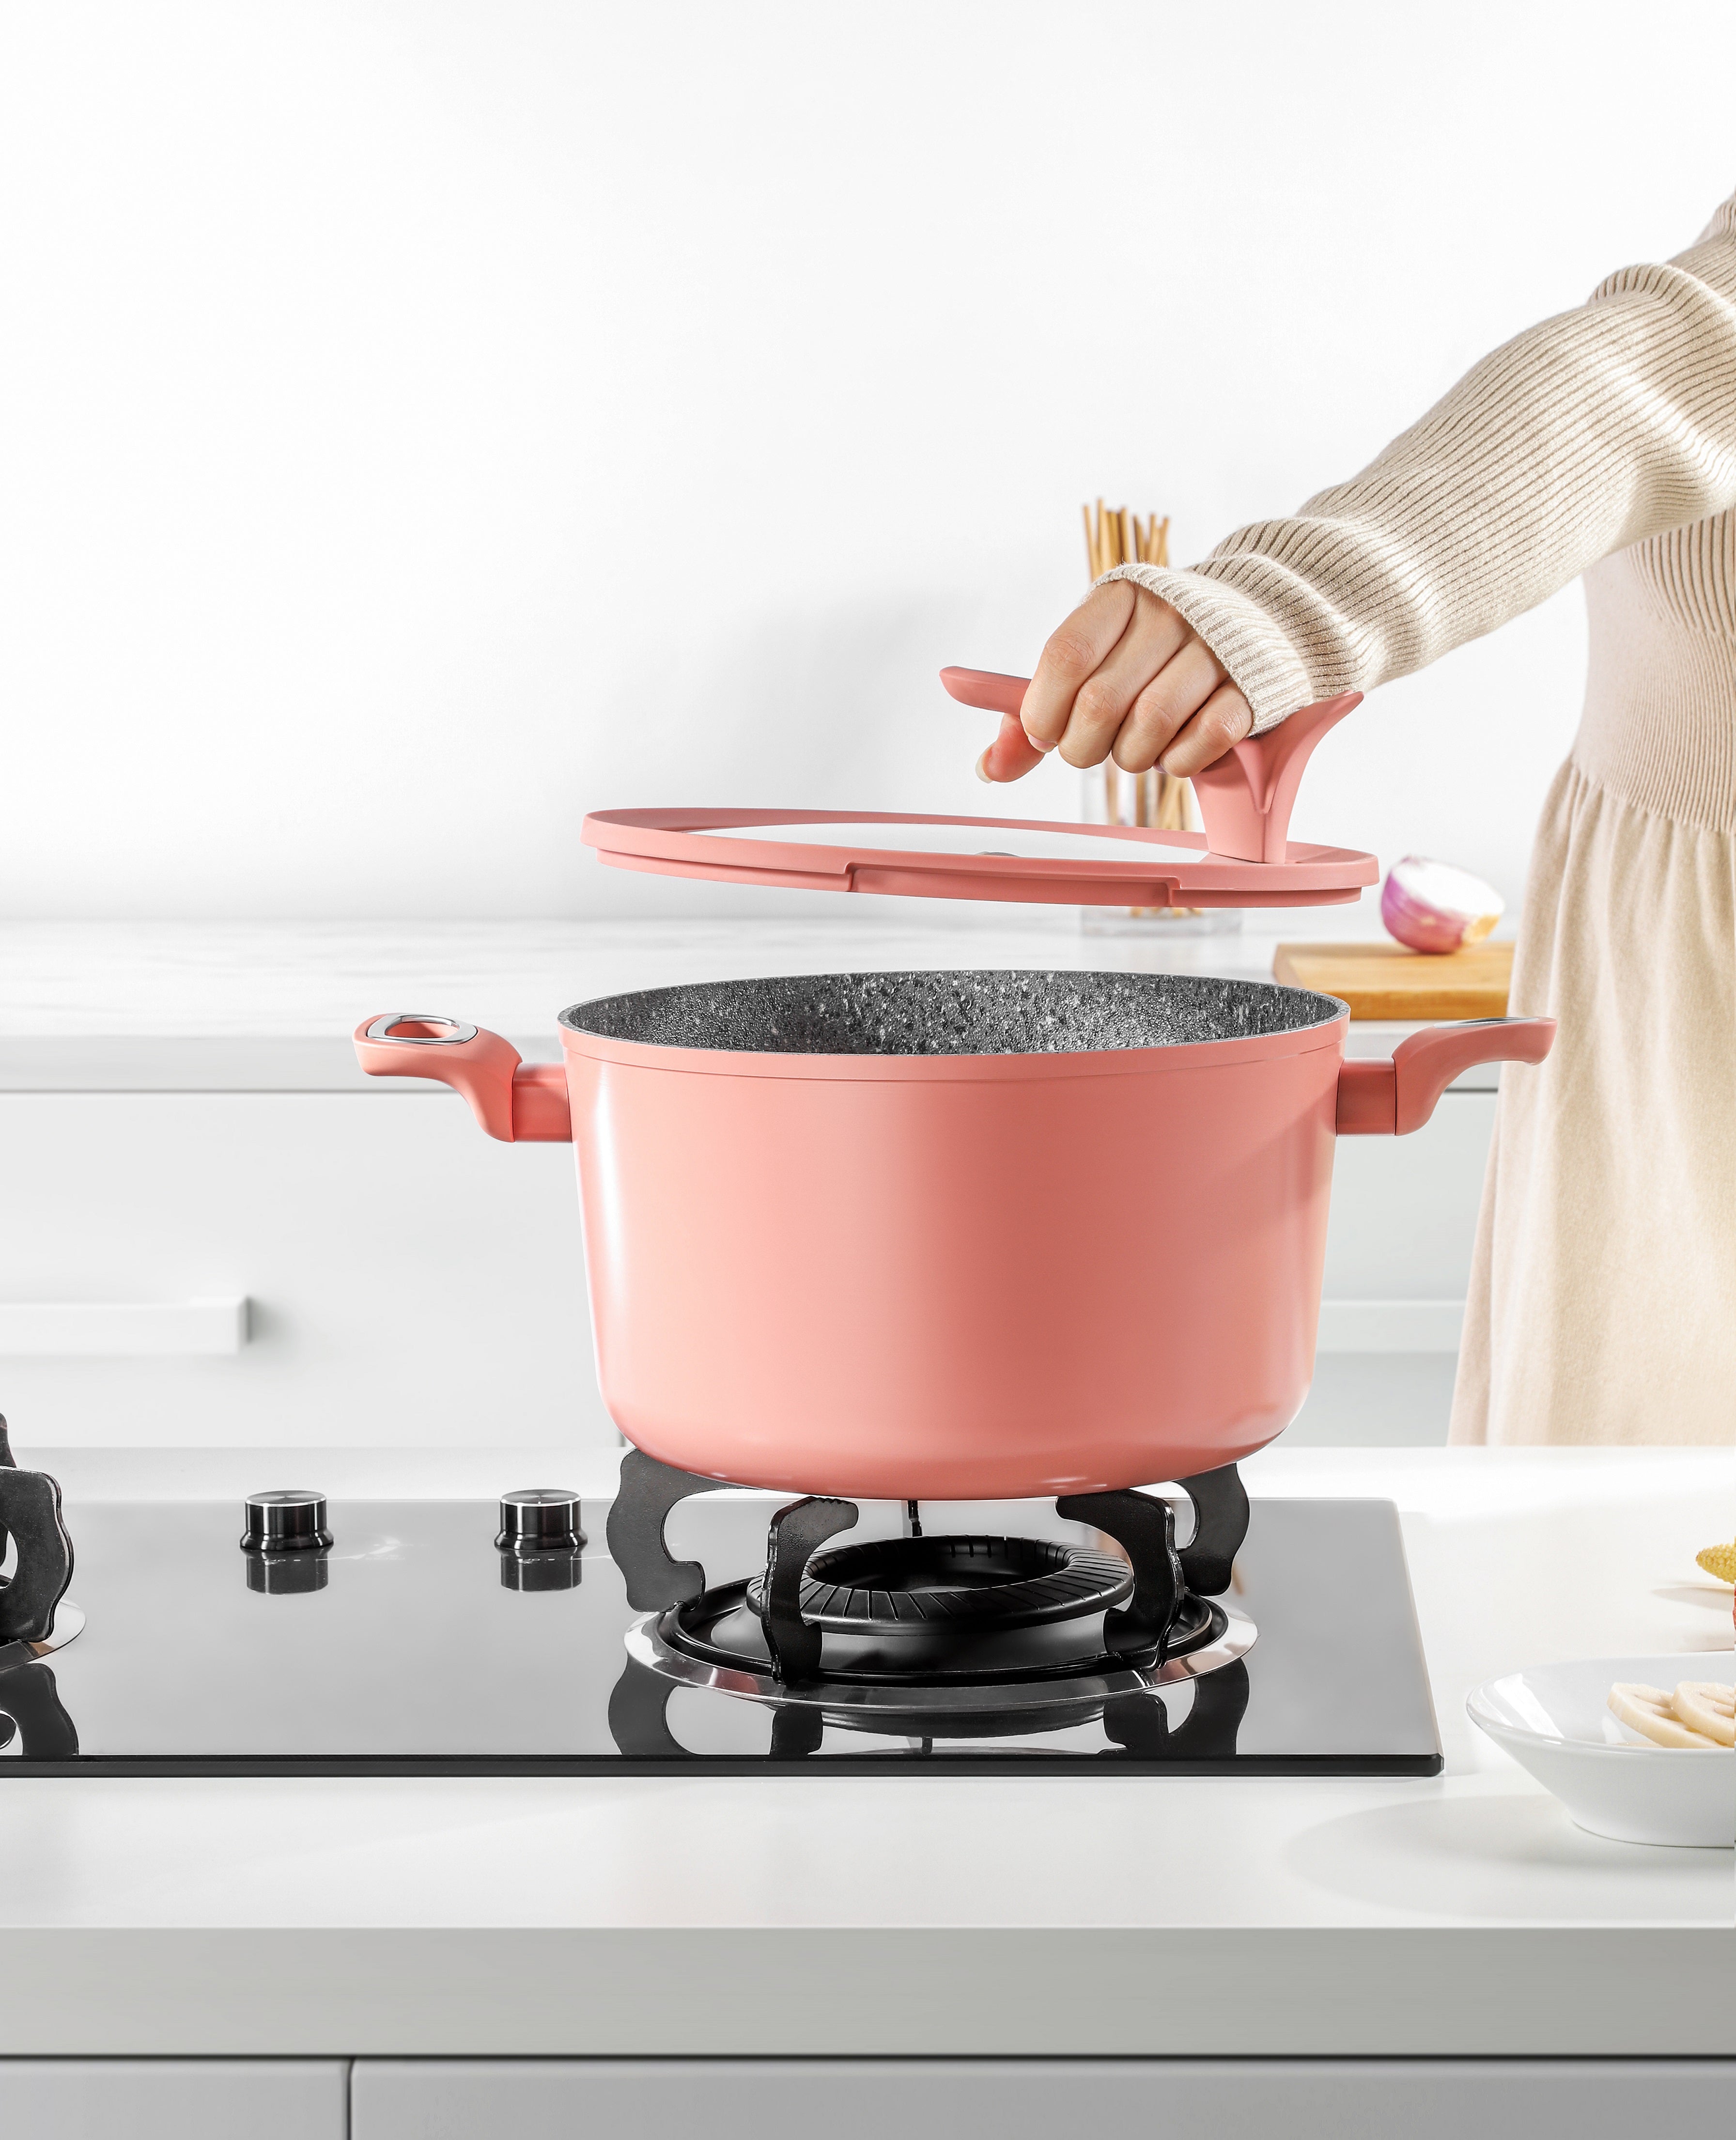 Masterclass Saucepan Casserole 6.5” 1.5 QT W/Lid Premium Cookware New Pink  Color